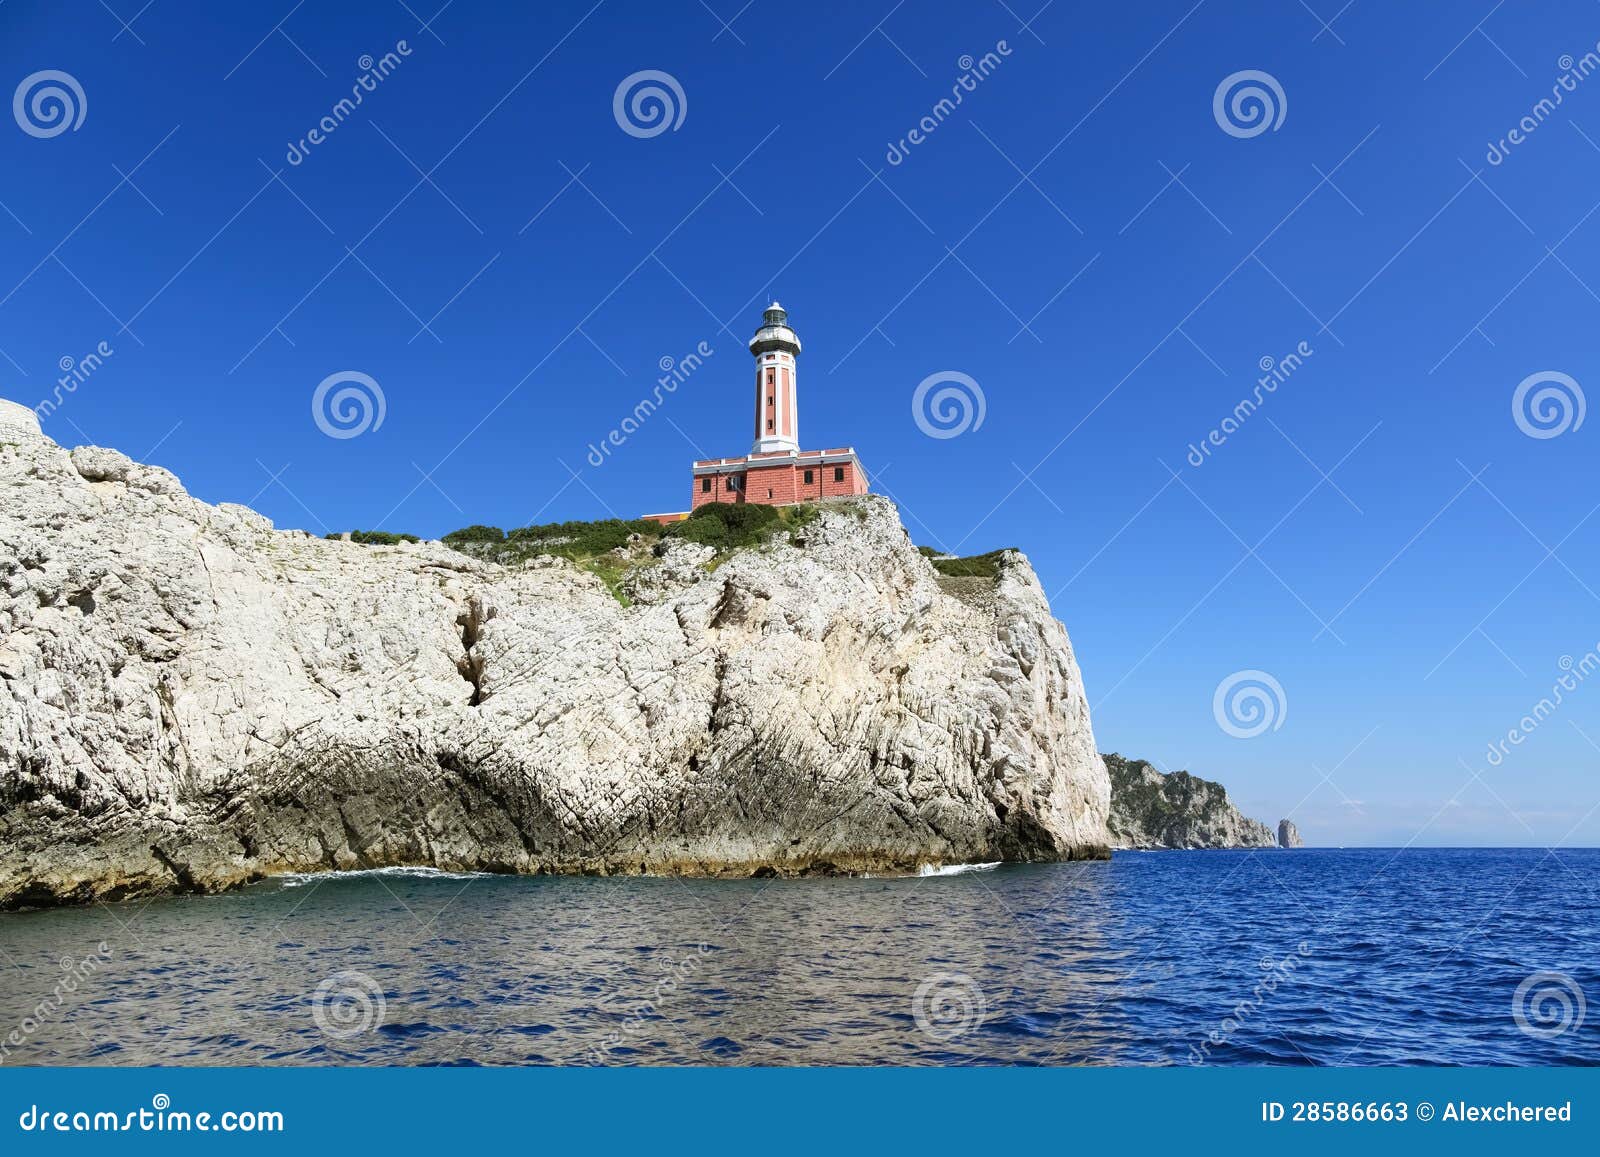 lighthouse on cliff, punto carena - capri island - italy